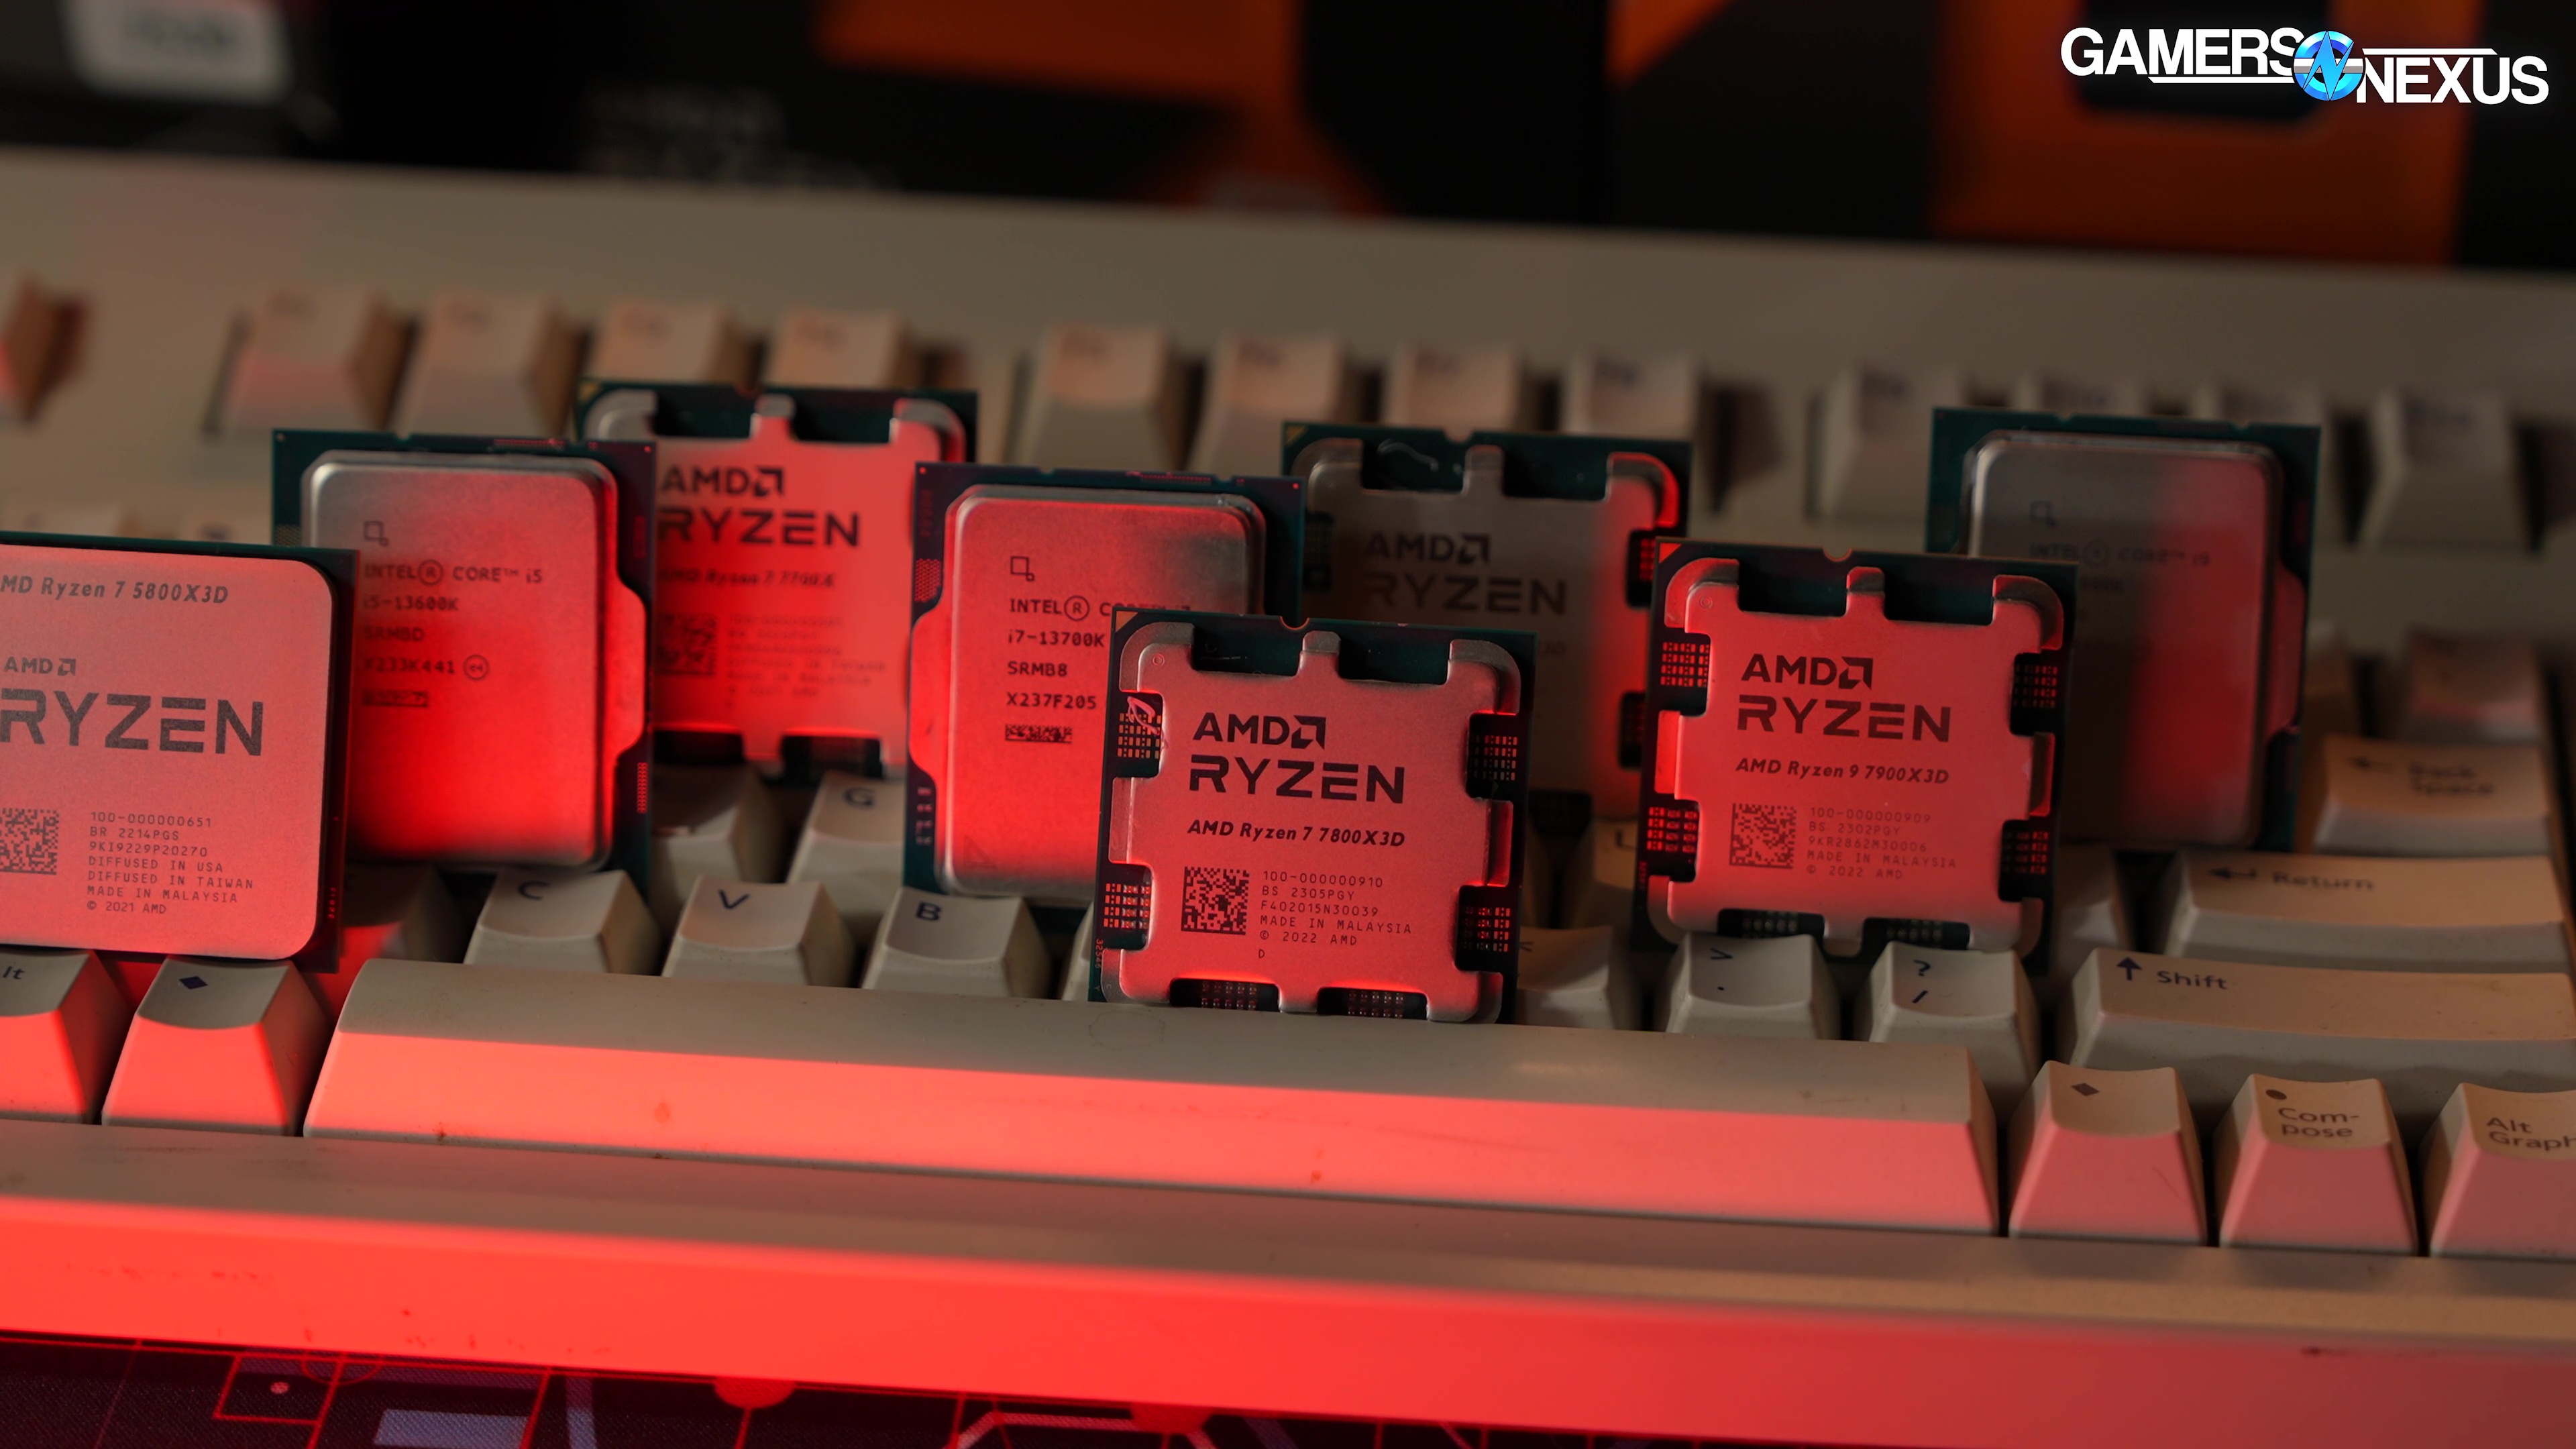 AMD Ryzen 7 7800 X3D - Hottest CPU in Stock Now! - Newegg